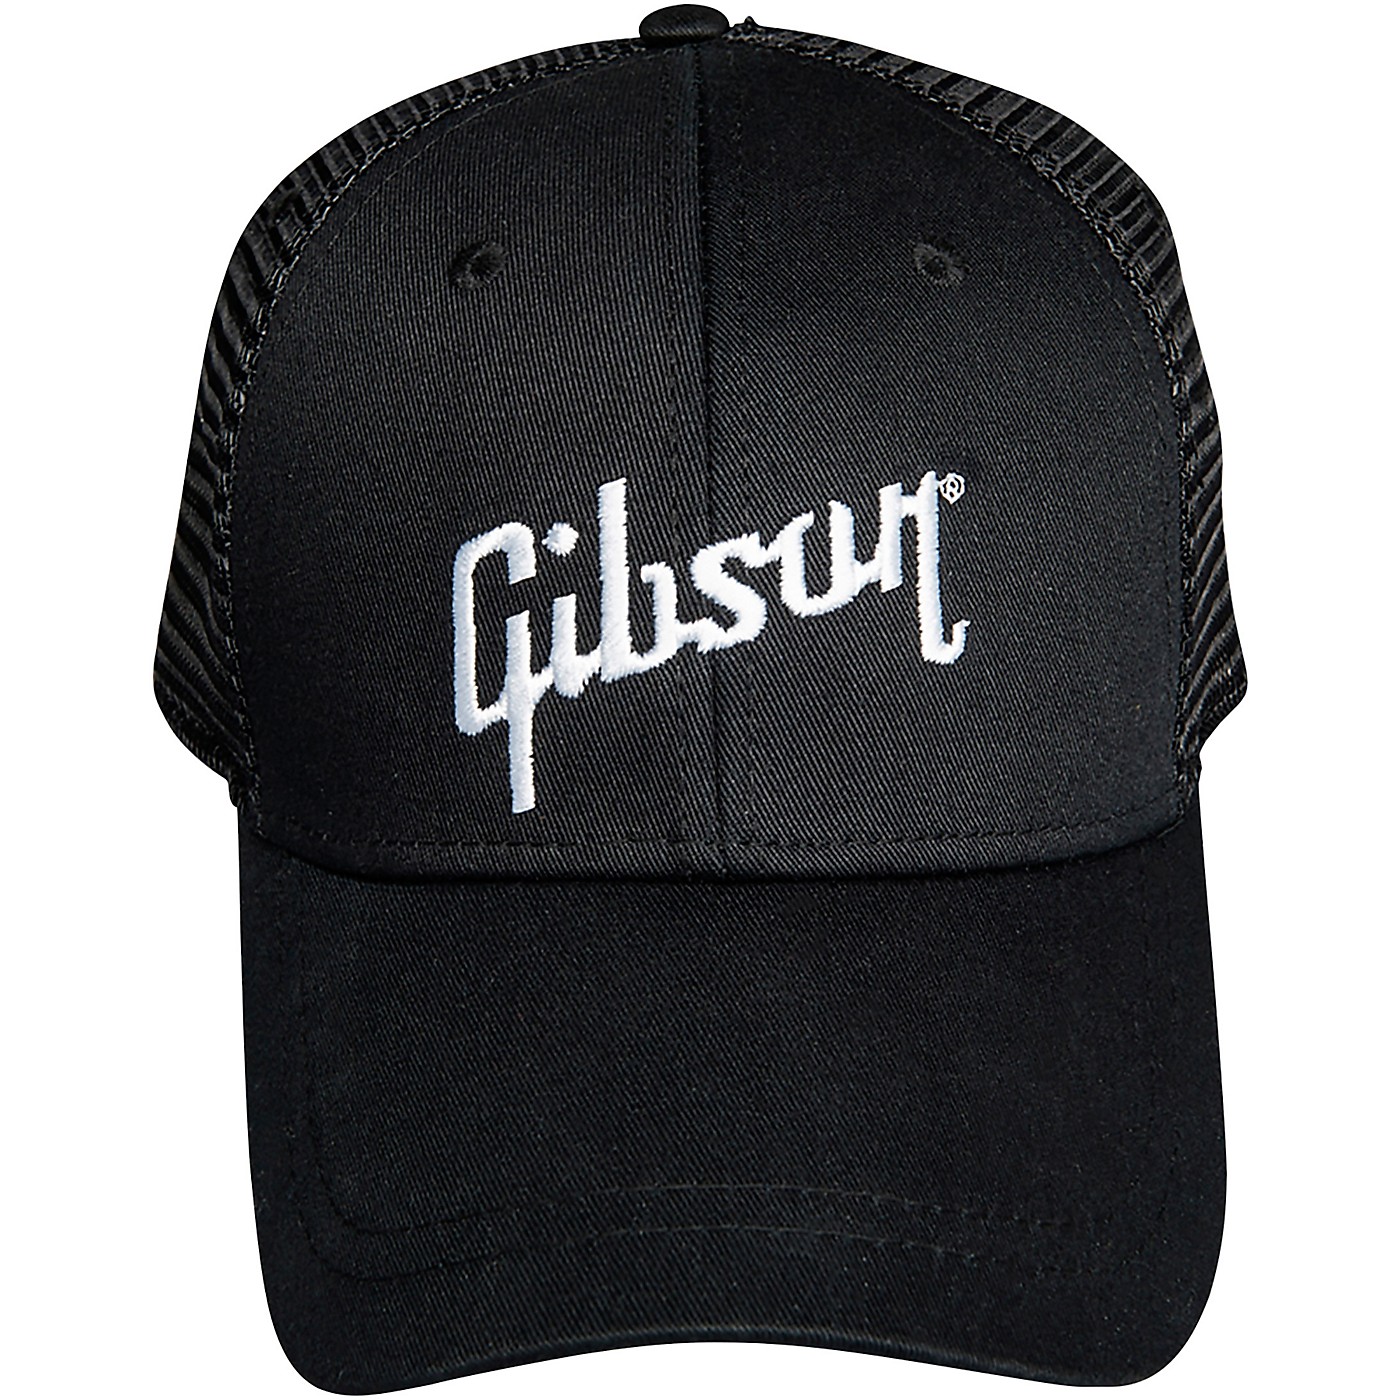 Gibson Black Trucker Snapback thumbnail